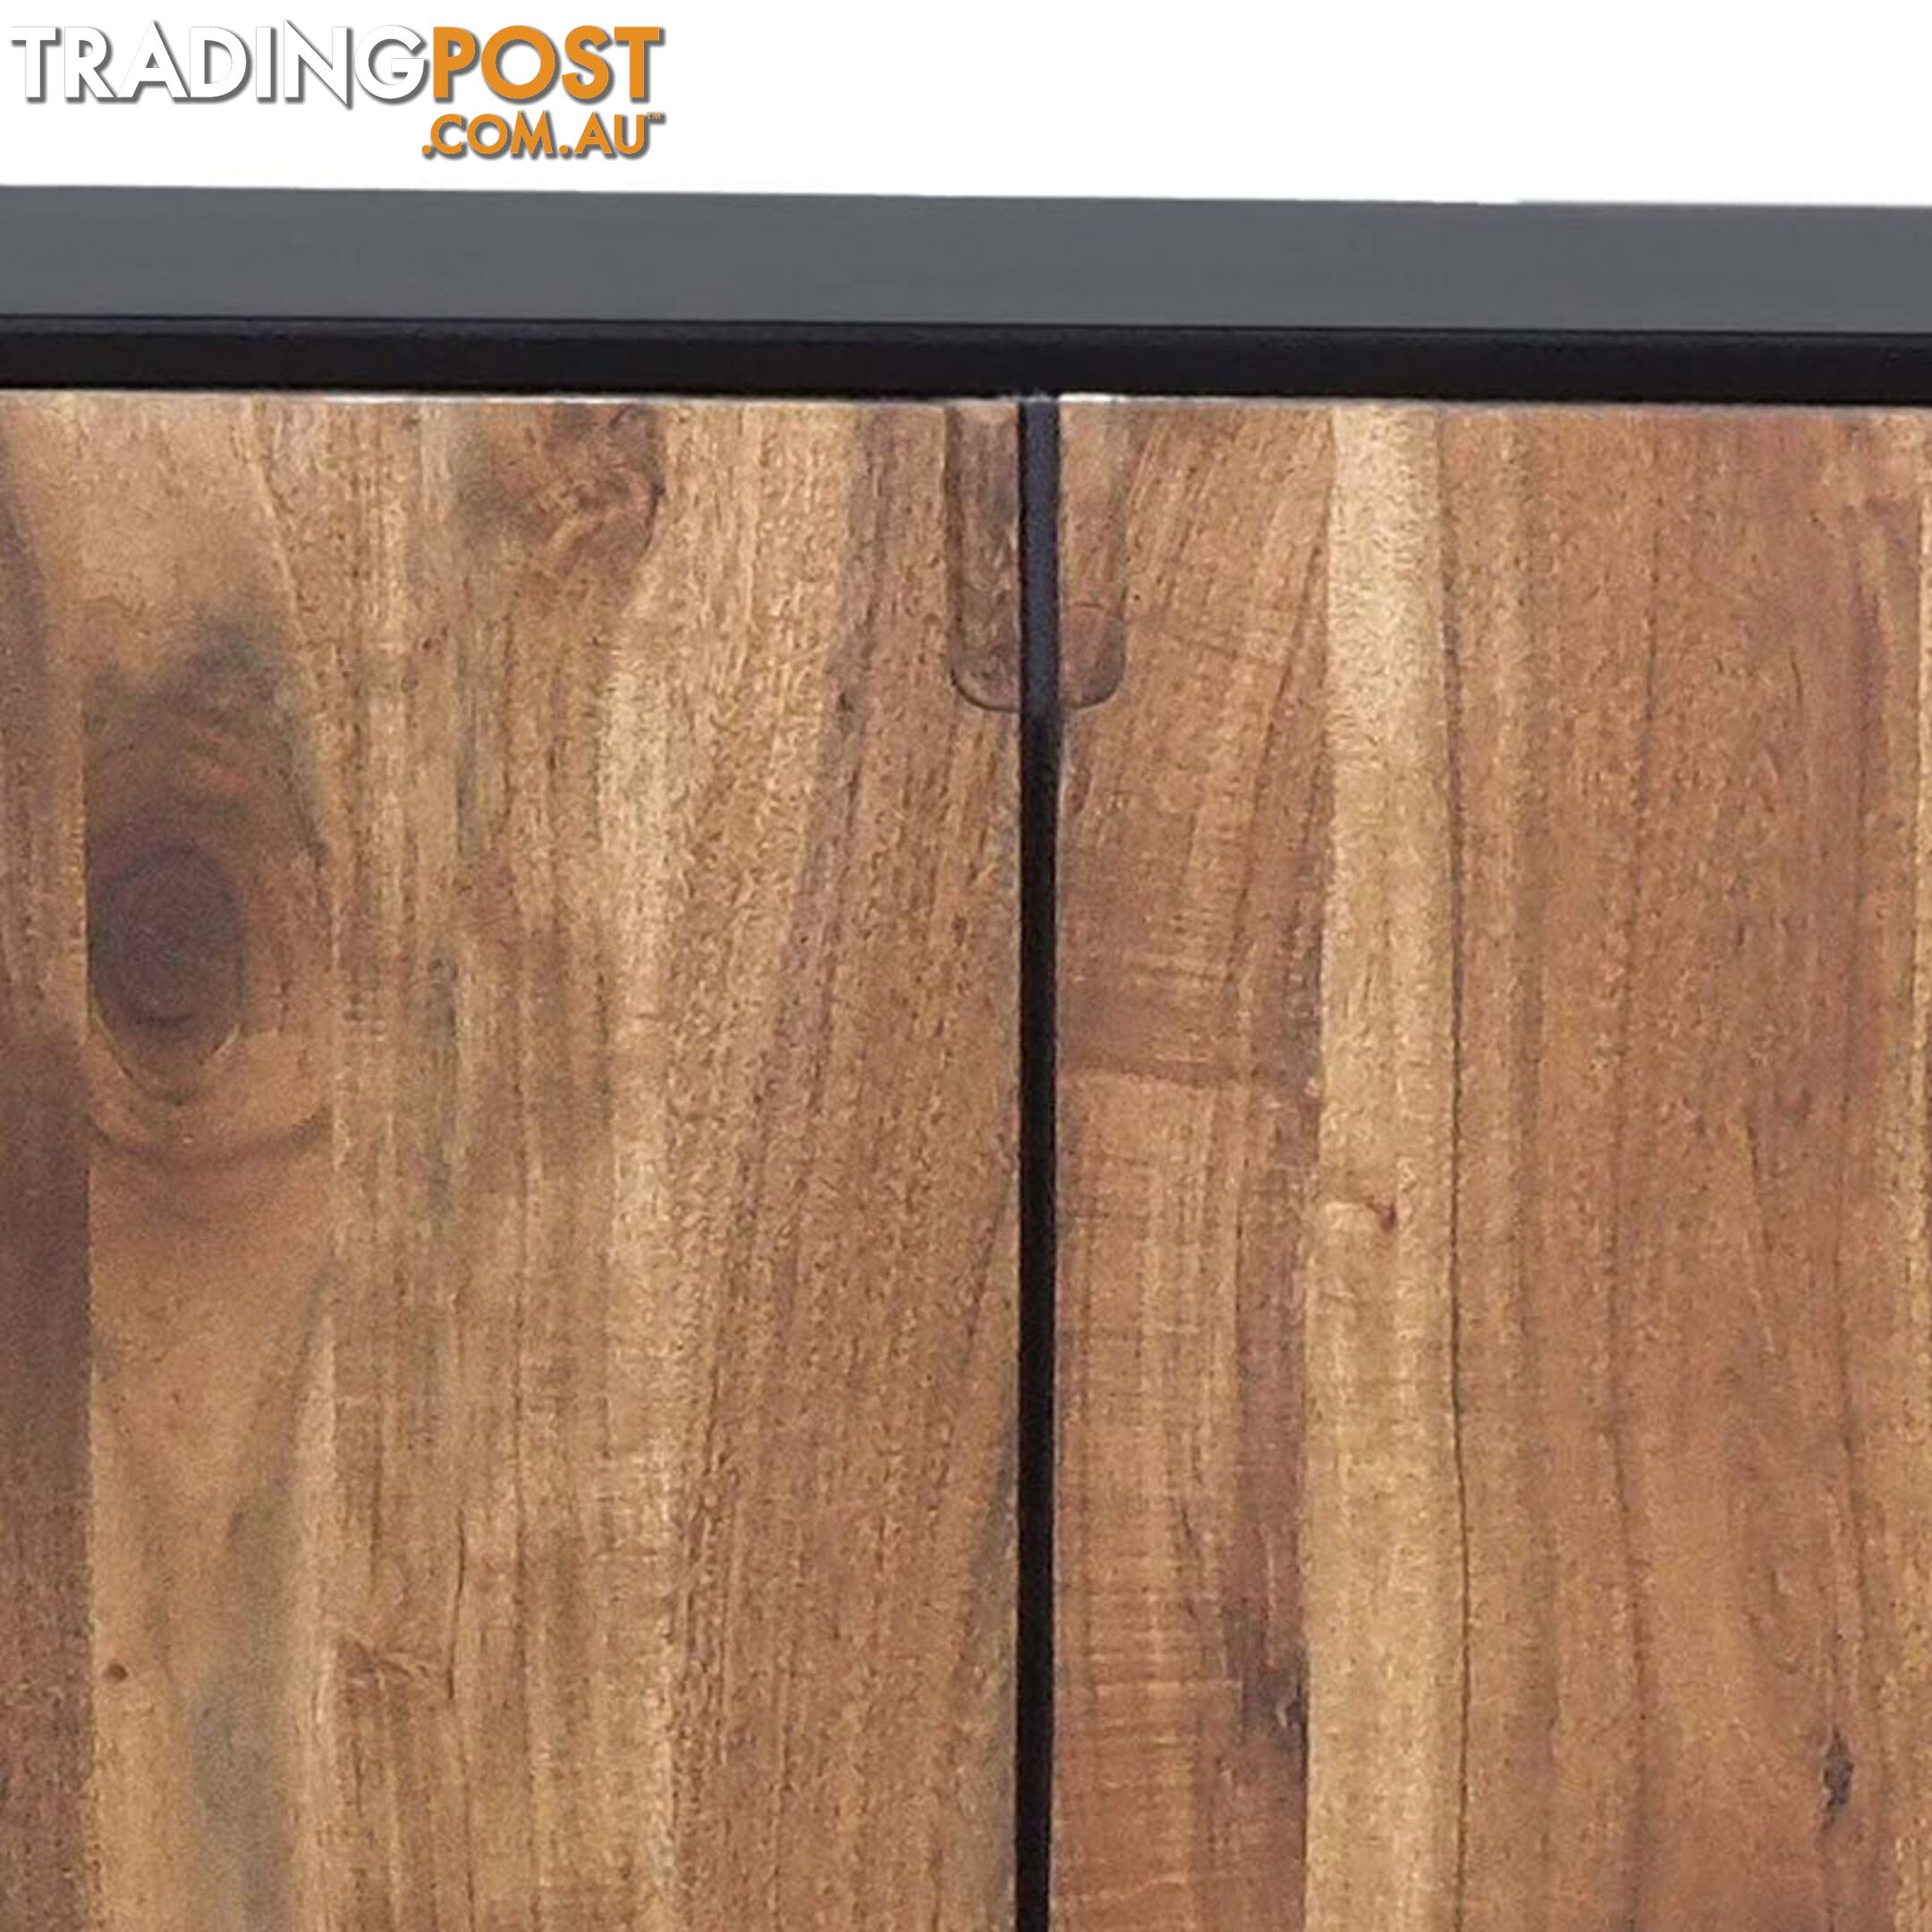 NAKITA Sideboard 160 cm Solid Acacia Wood - Honey & Black - LX-2102 - 9334719011950